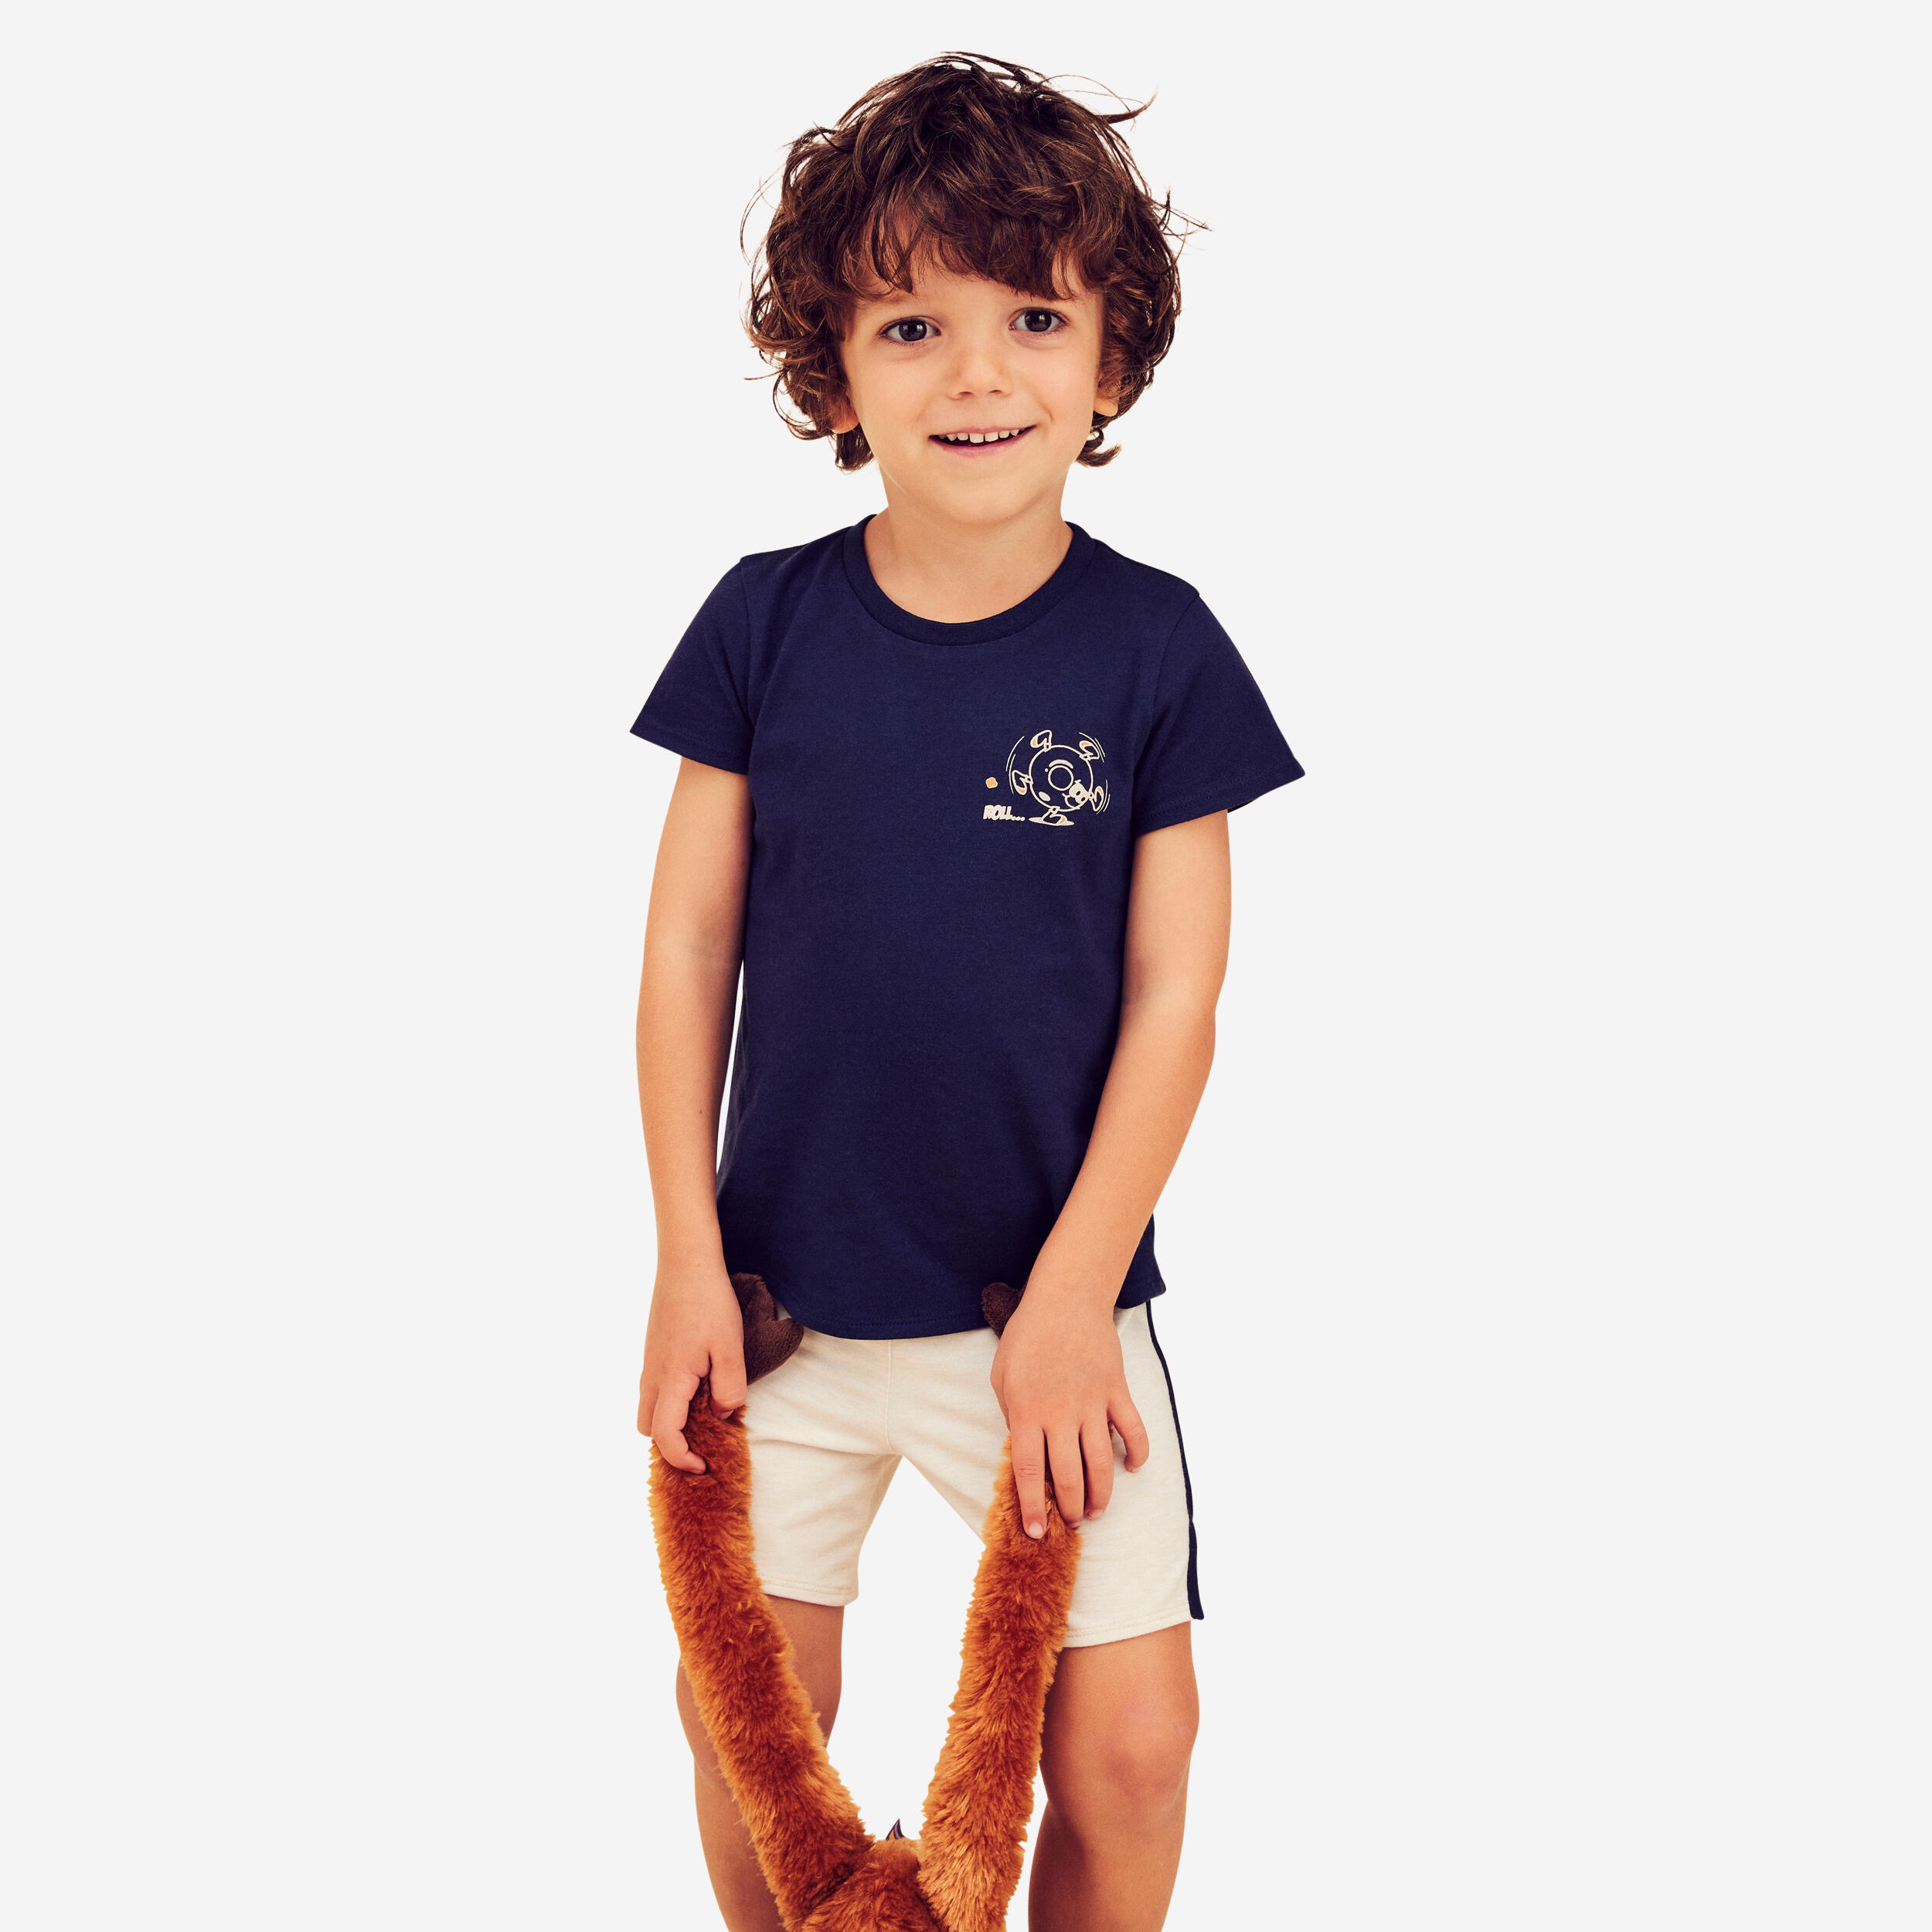 Kids’ Cotton T-Shirt – Basic Navy Blue